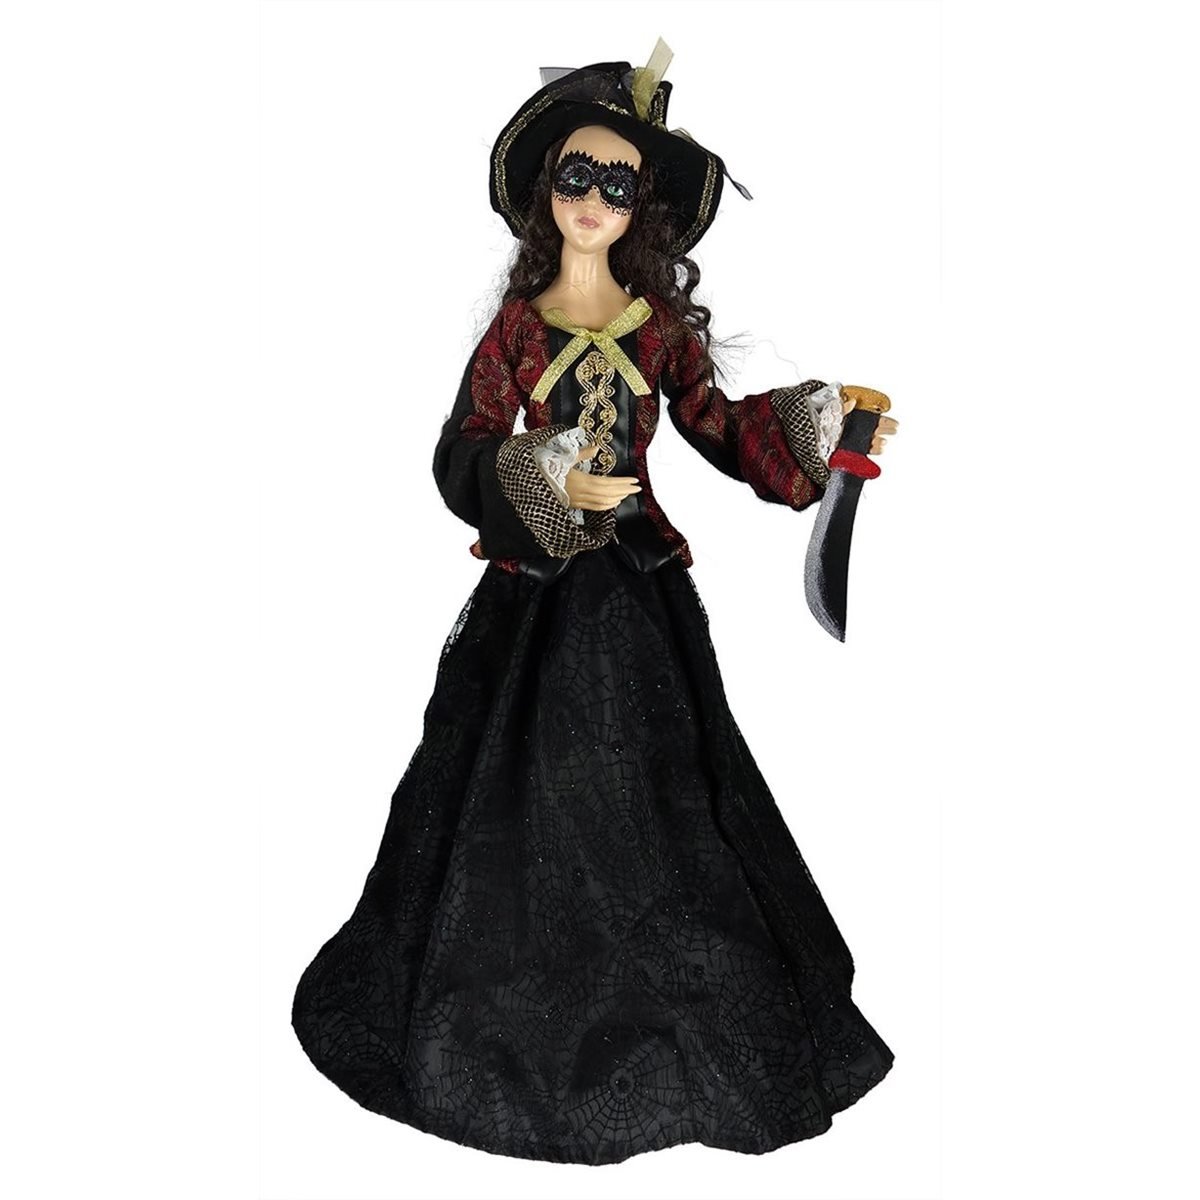 Anne Bonny Pirate